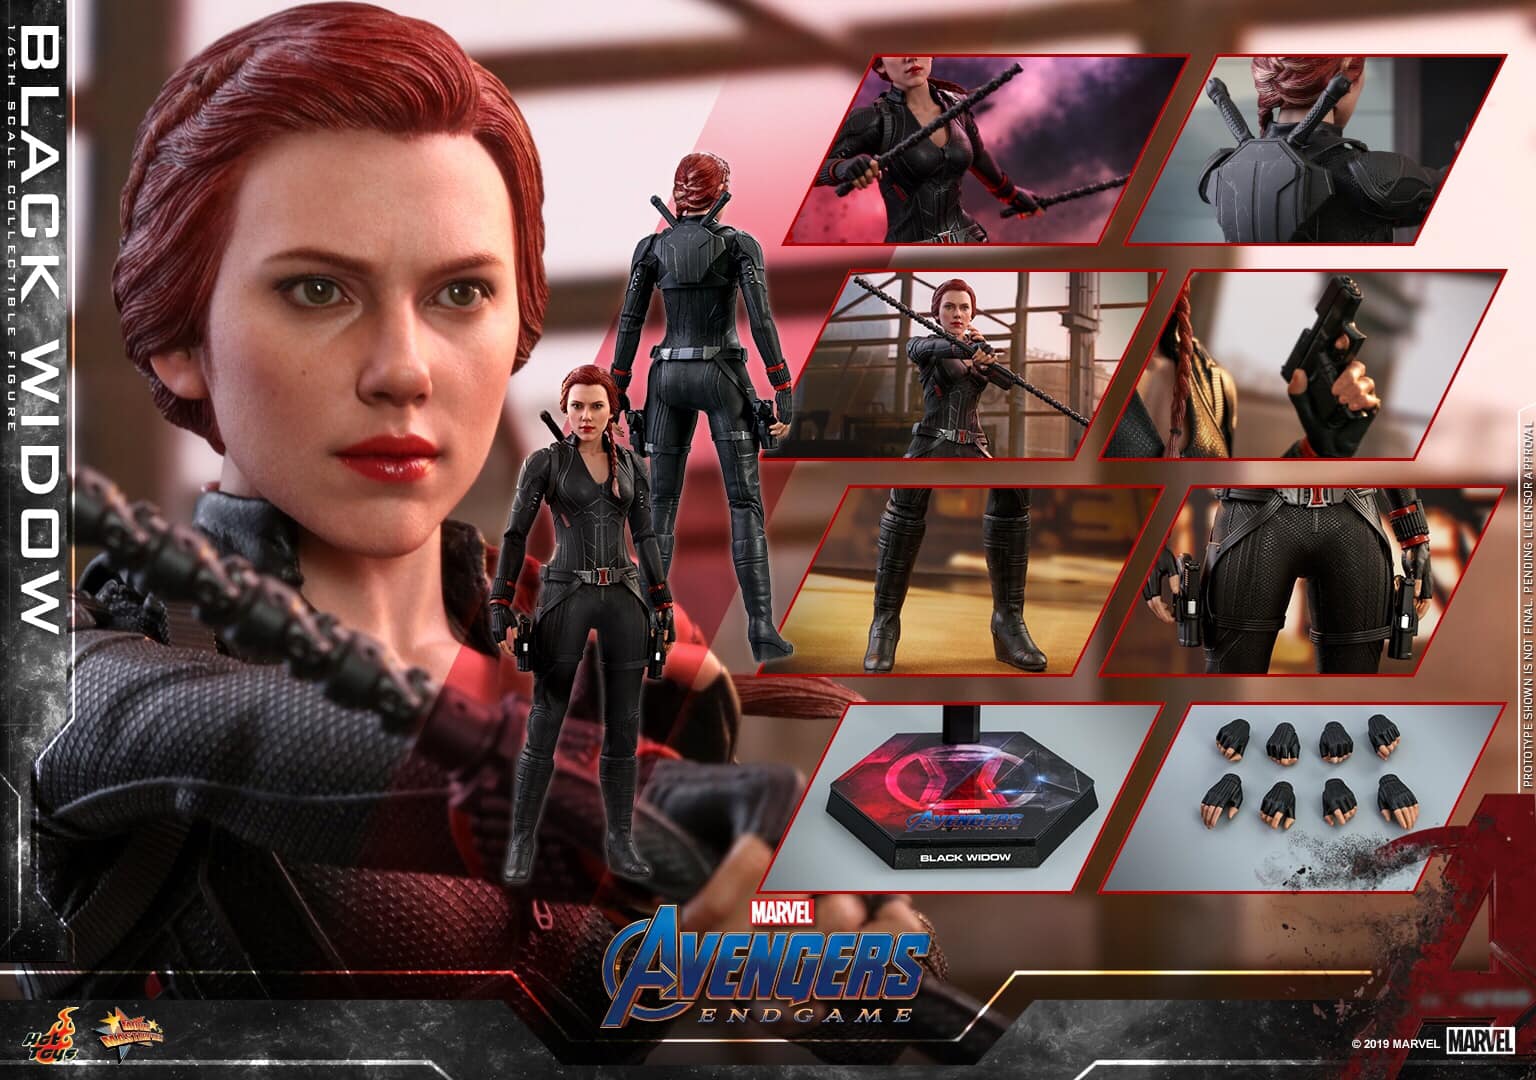 Hot toys Black Widow Avengers Endgame 